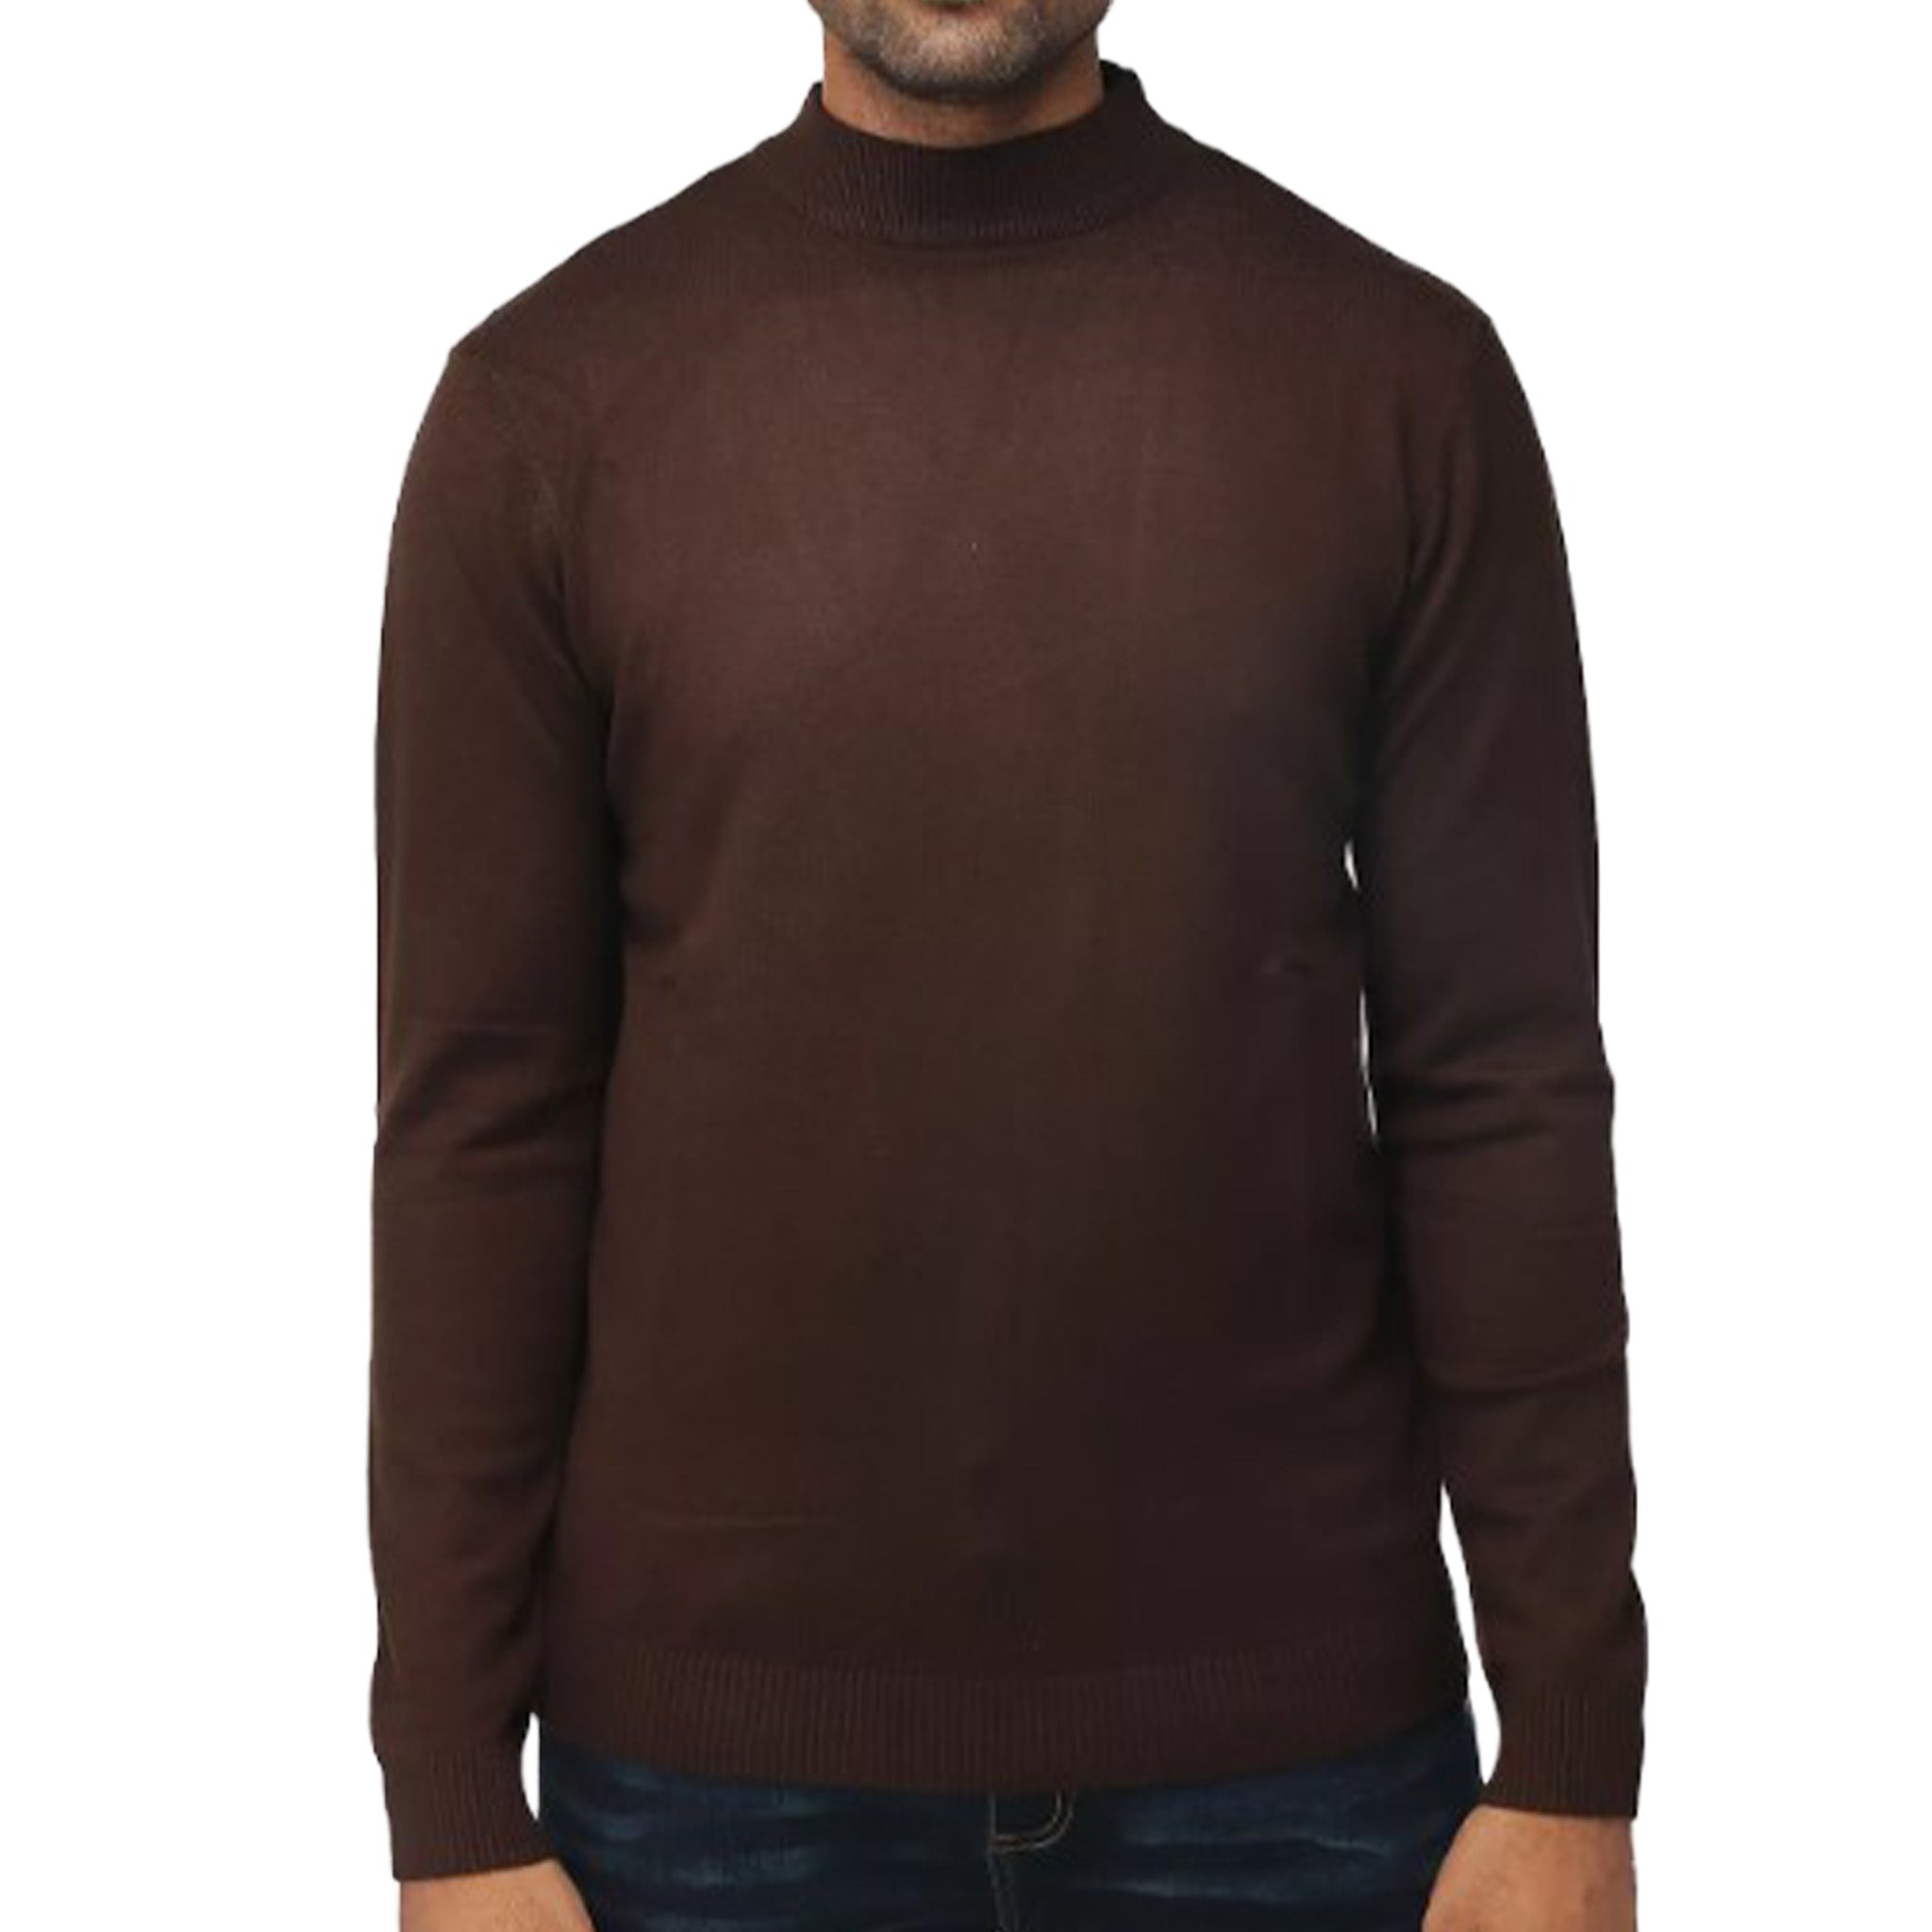 Men's Brown Turtle Neck Sweater